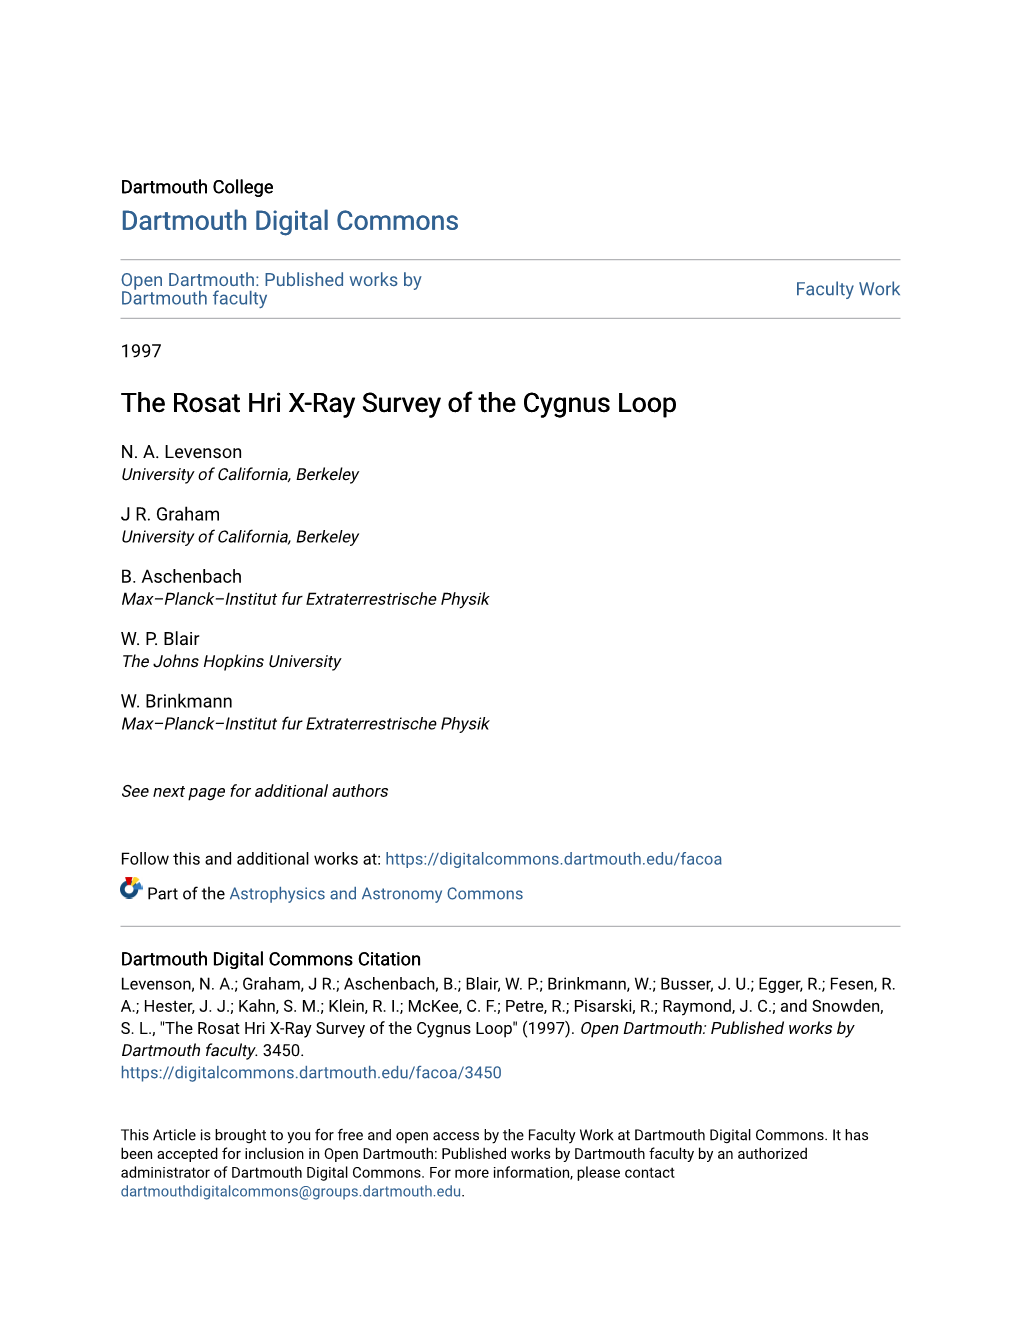 The Rosat Hri X-Ray Survey of the Cygnus Loop